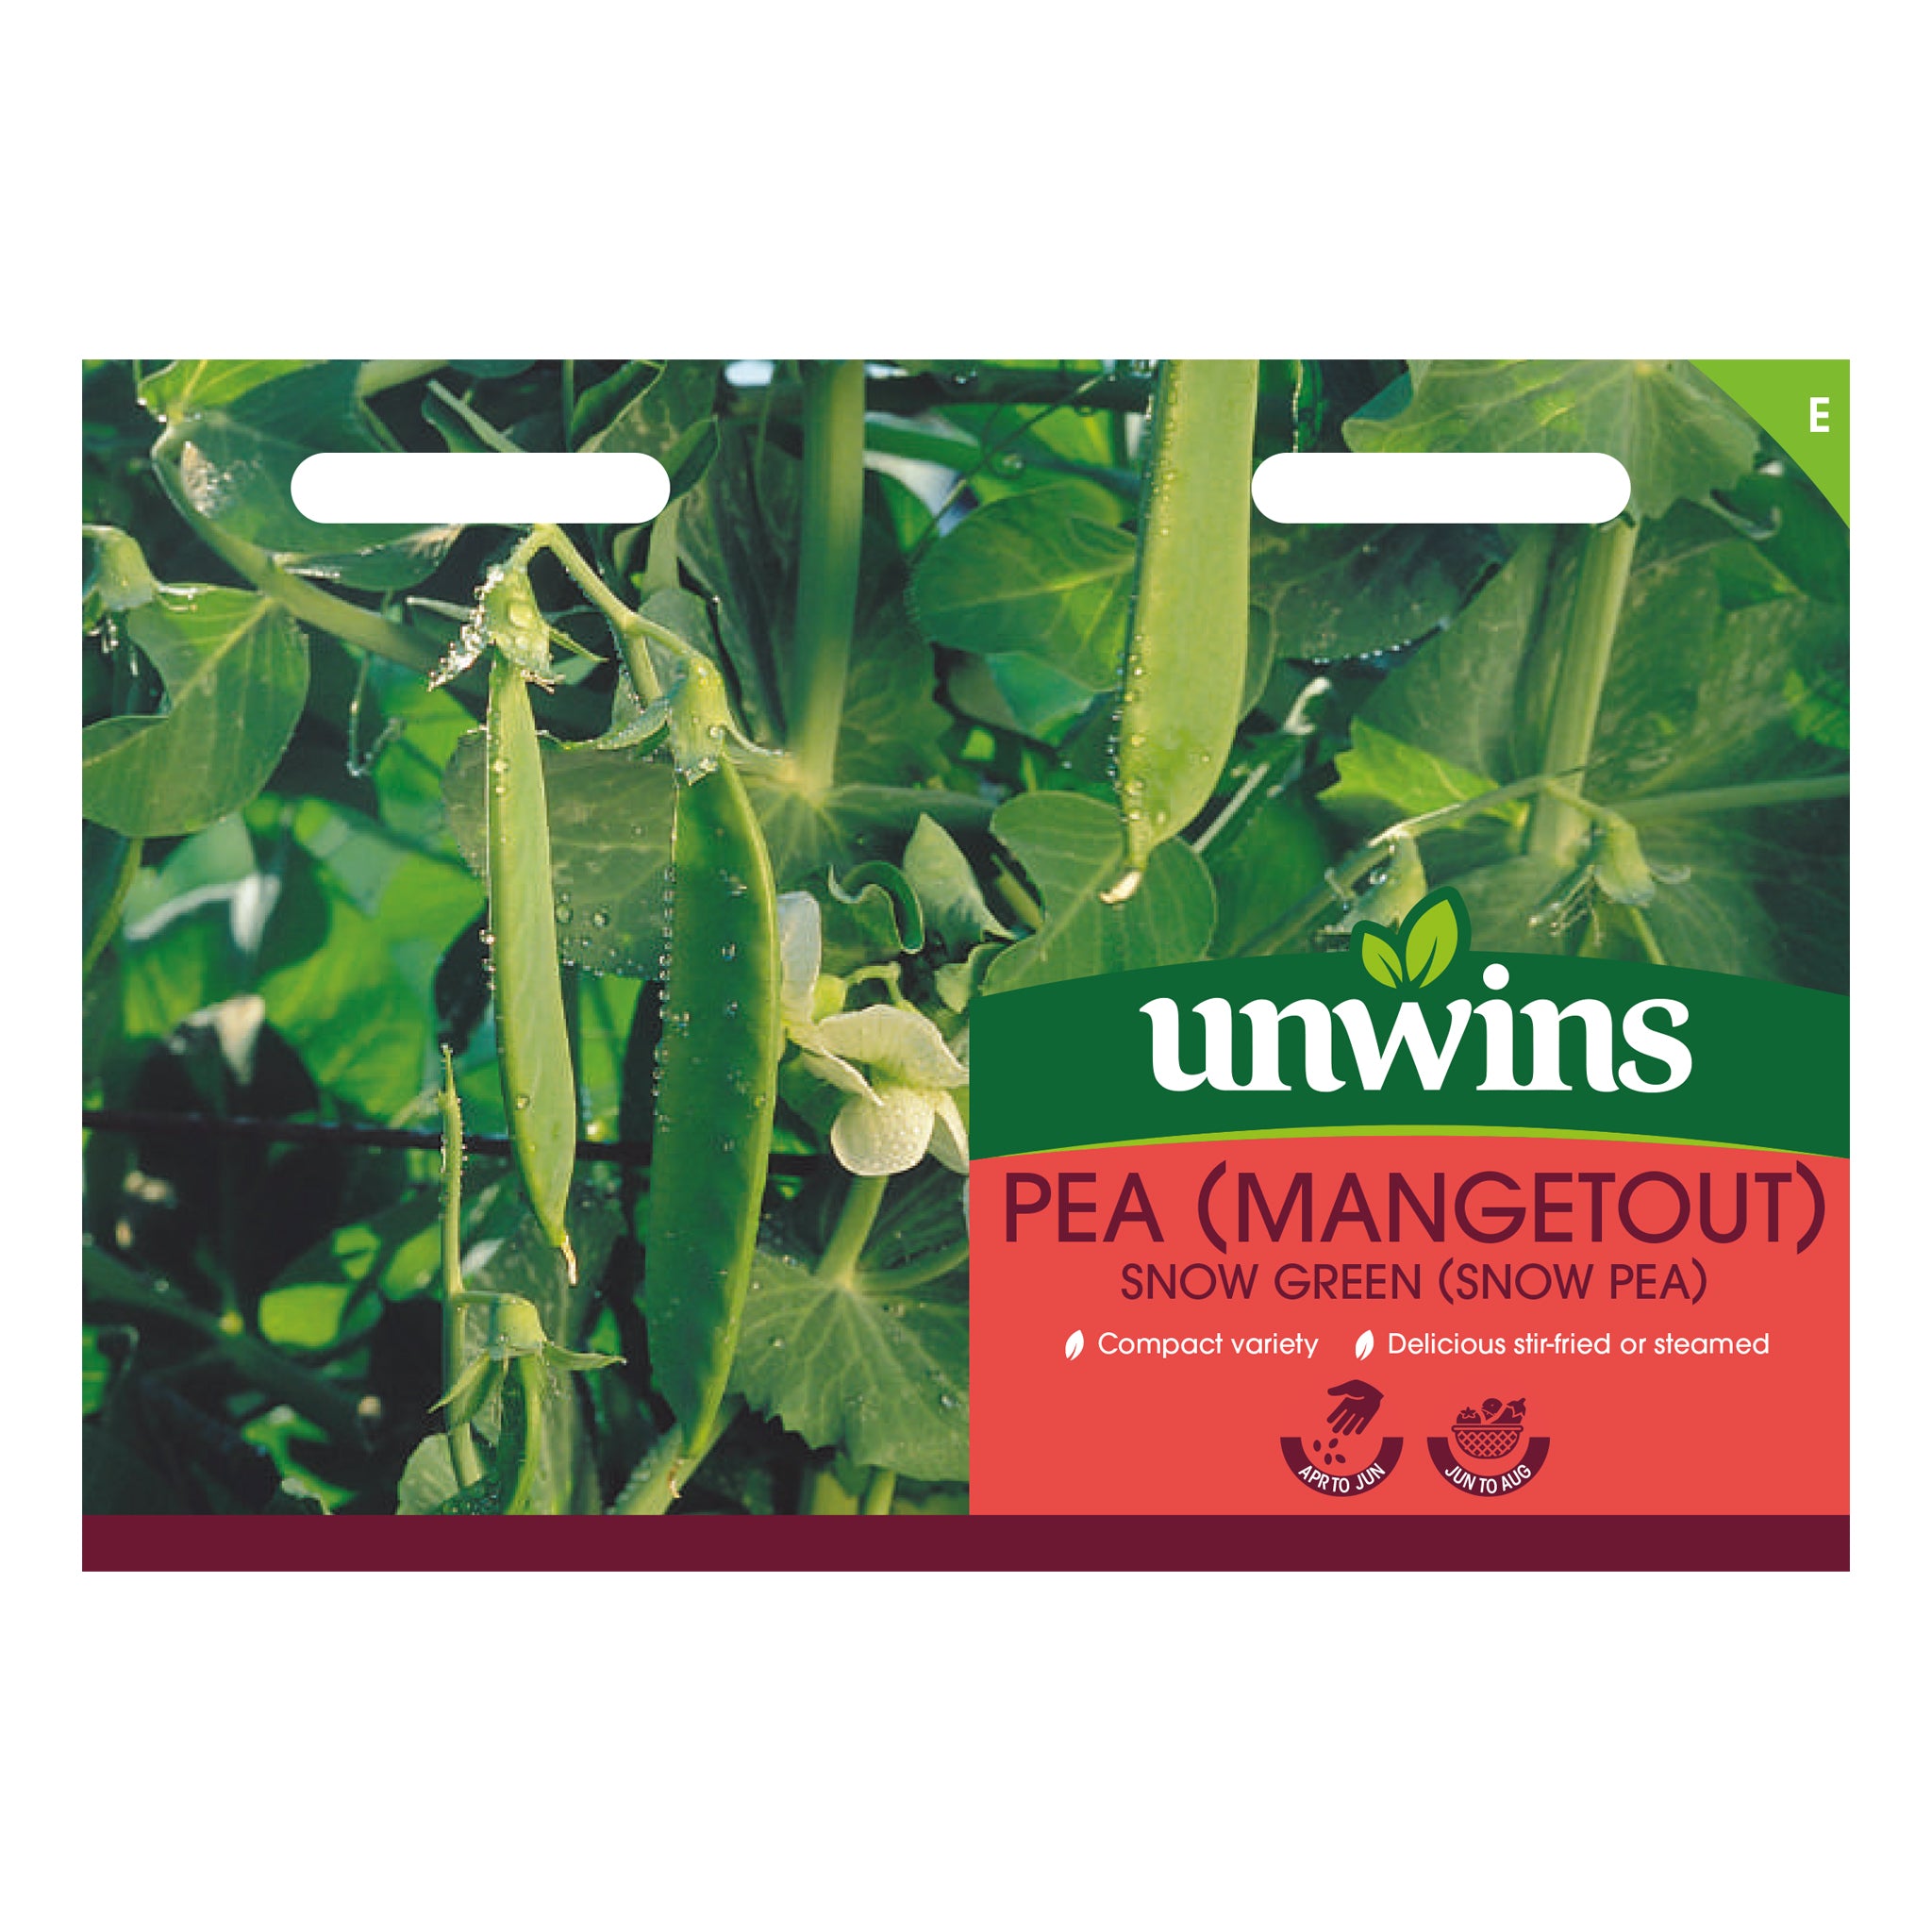 Unwins Mangetout Snow Pea Snow Green Seeds